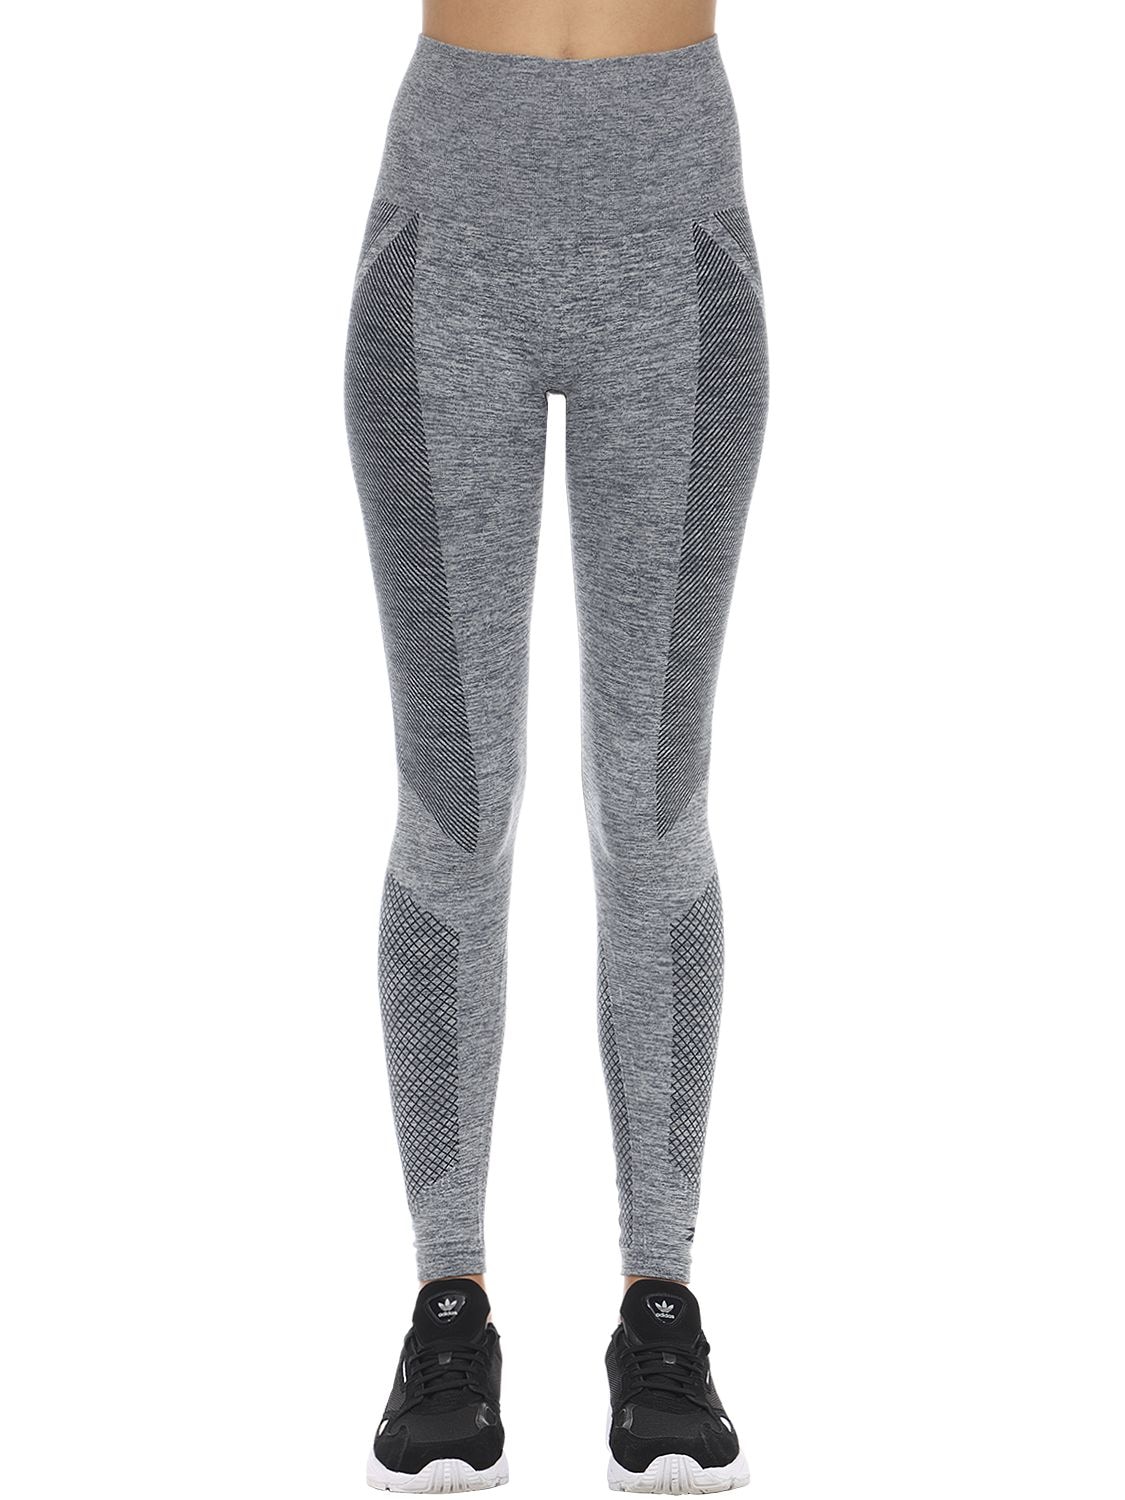 reebok leggings grey